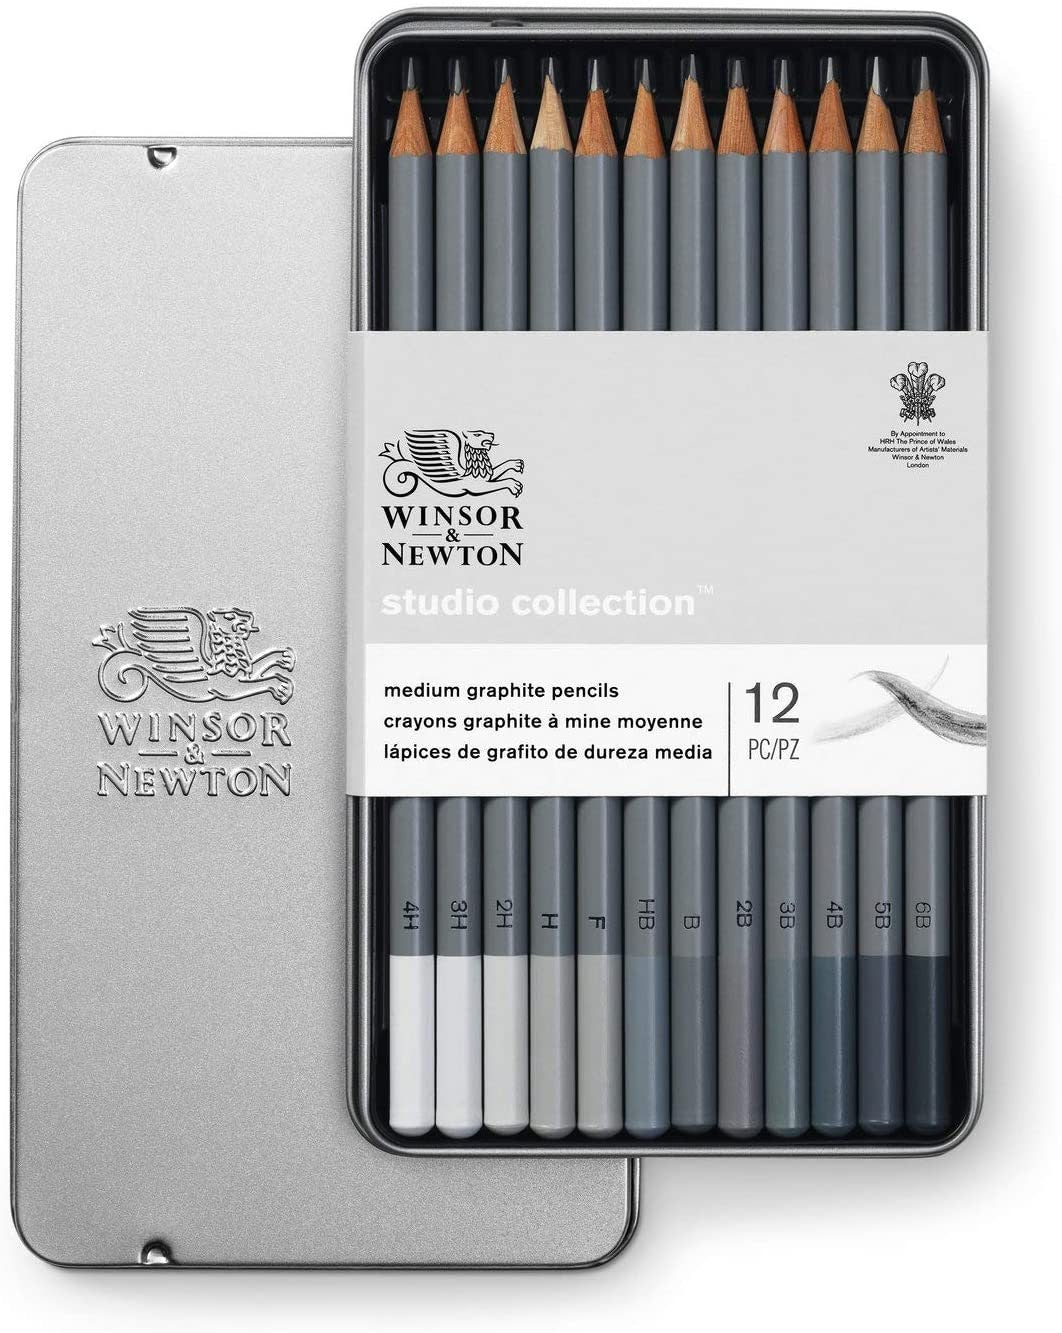 Winsor & Newton Studio Collection Graphite Pencil Set of 12 Medium